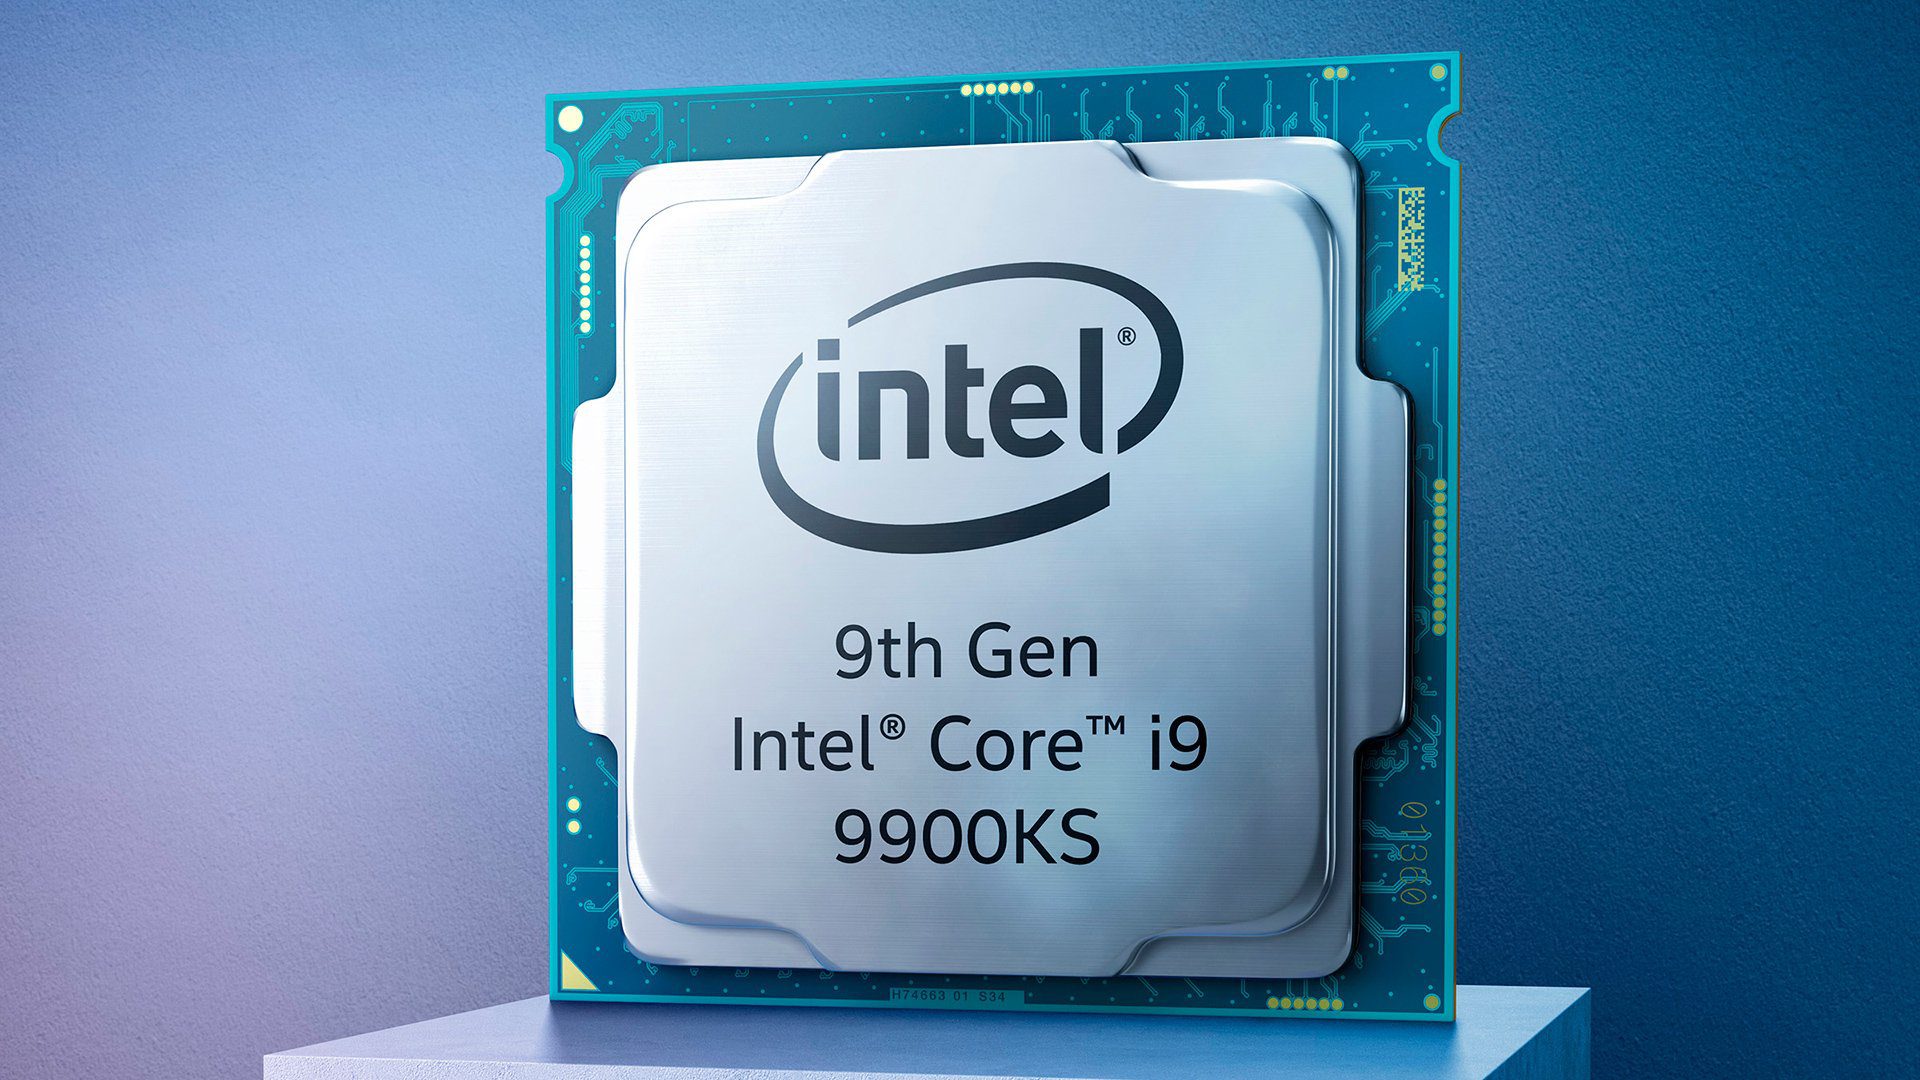 Интел сор. I9 9900ks. Core i9 9900. Intel Core i9-9900k. Процессор Интел 9.